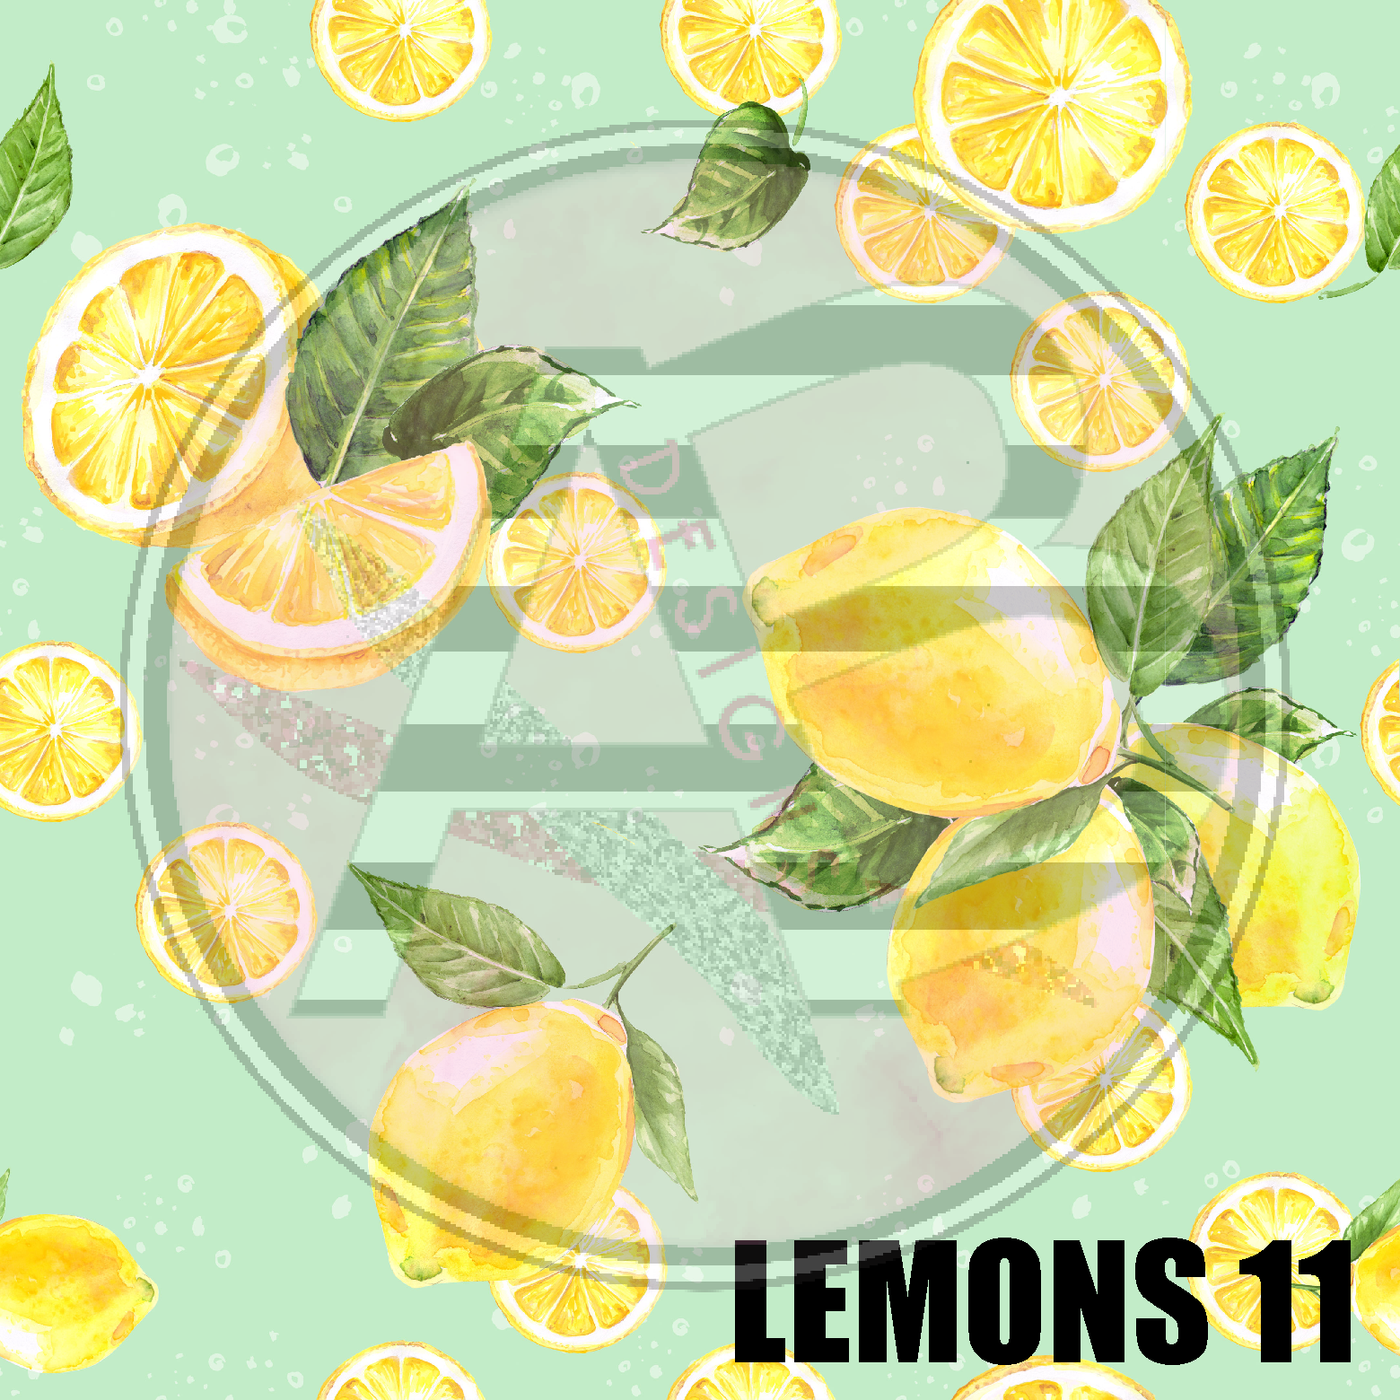 Adhesive Patterned Vinyl - Lemons 11